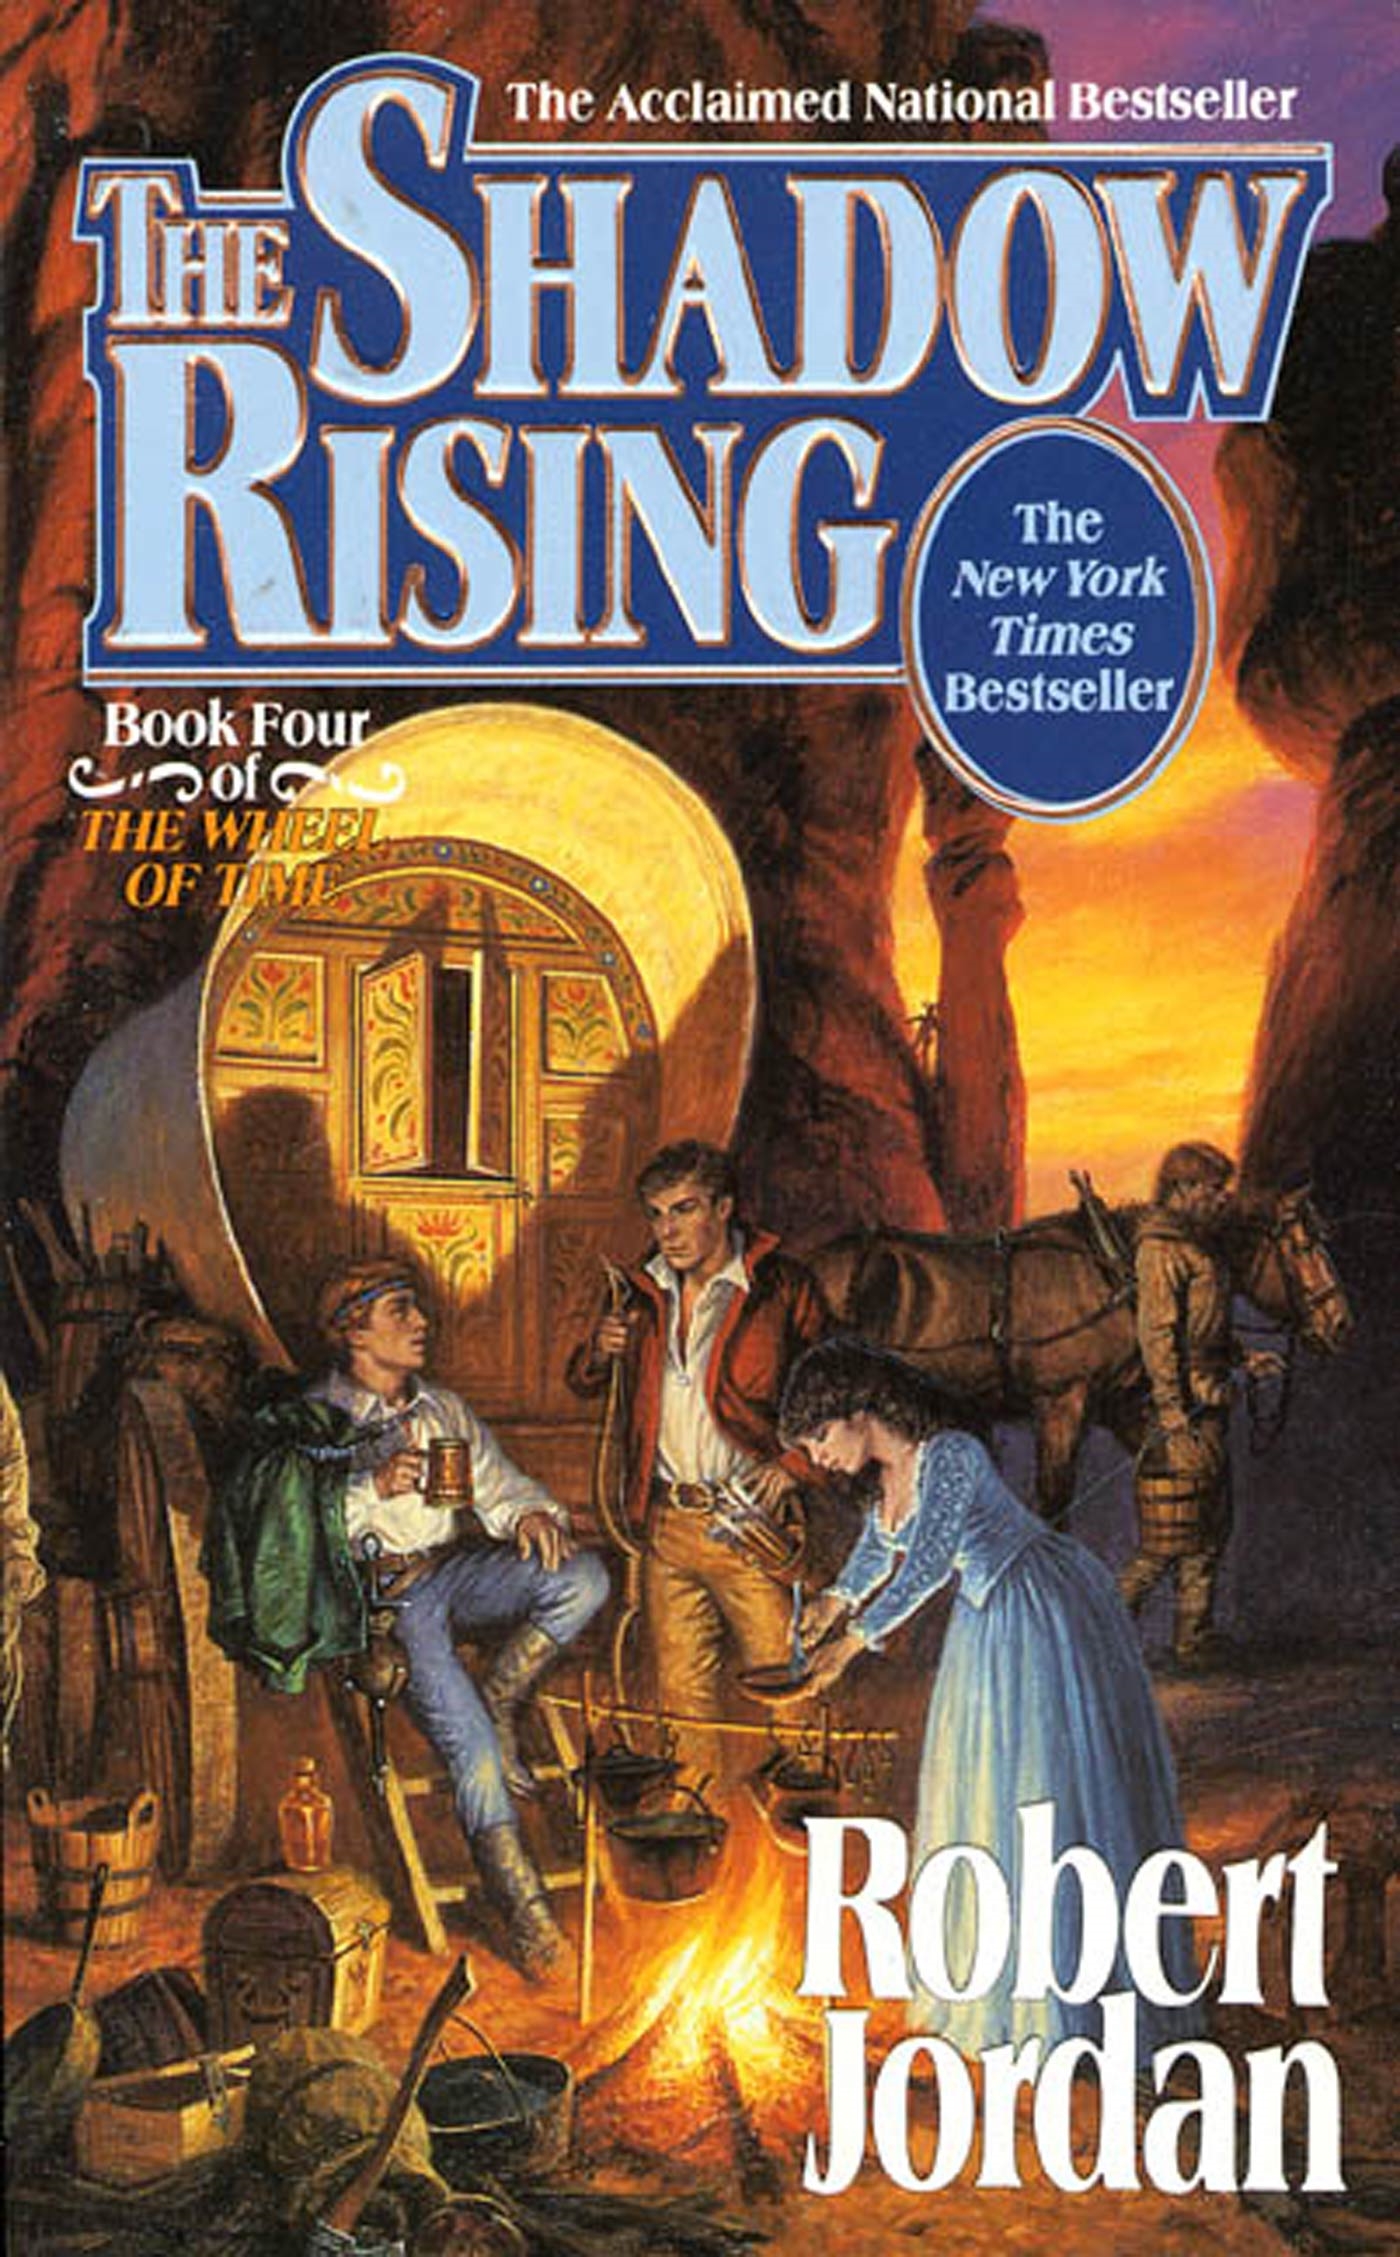 Robert Jordan: The Shadow Rising (The Wheel of Time, Book 4) (AudiobookFormat, 1992, Publishing Mills)